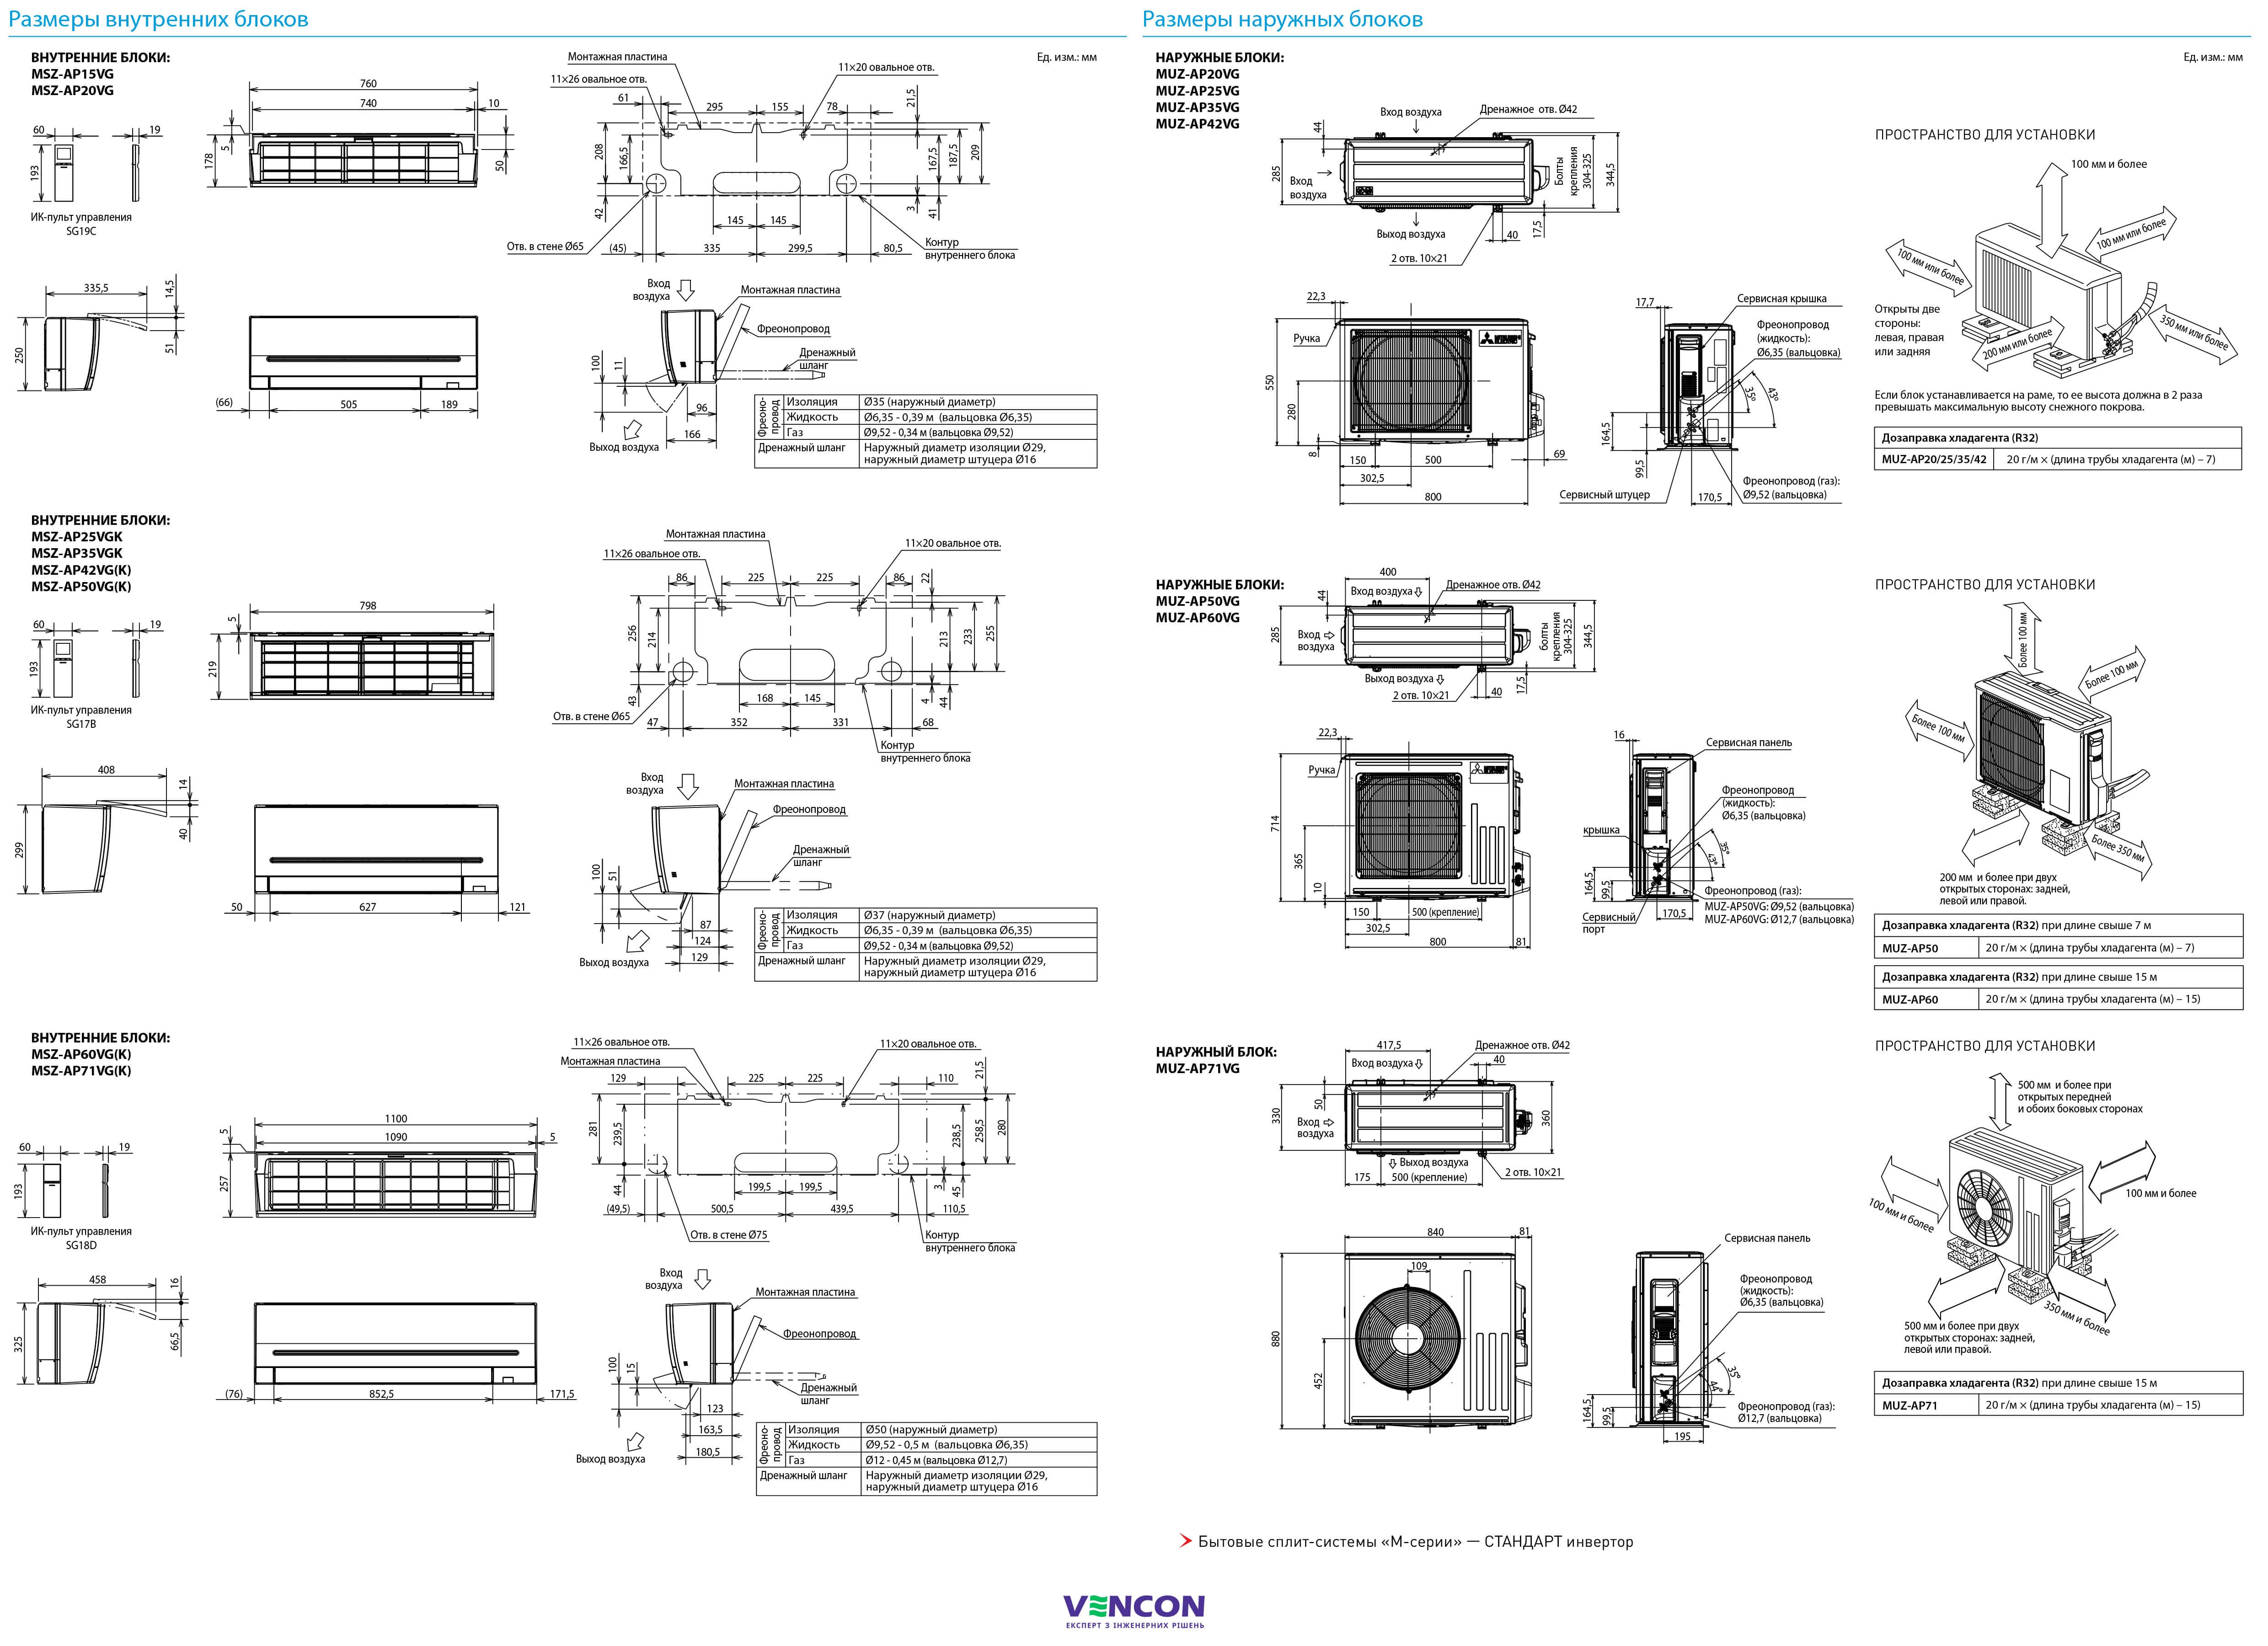 Mitsubishi Electric Standard Inverter MSZ-AP71VGK/MUZ-AP71VG Габаритные размеры